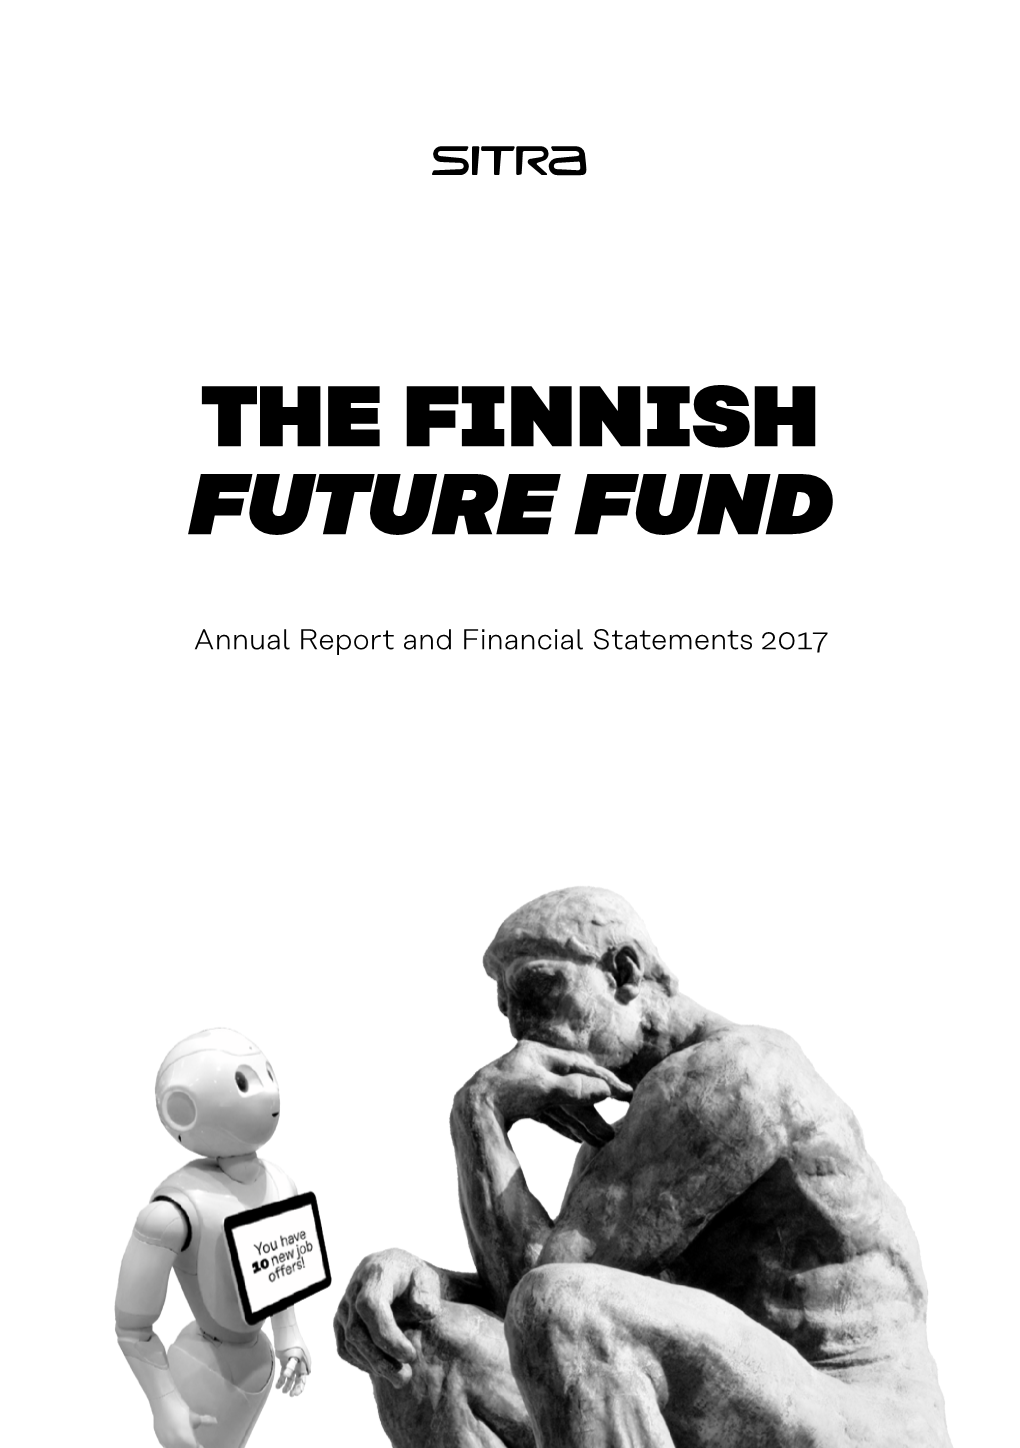 The Finnish Future Fund